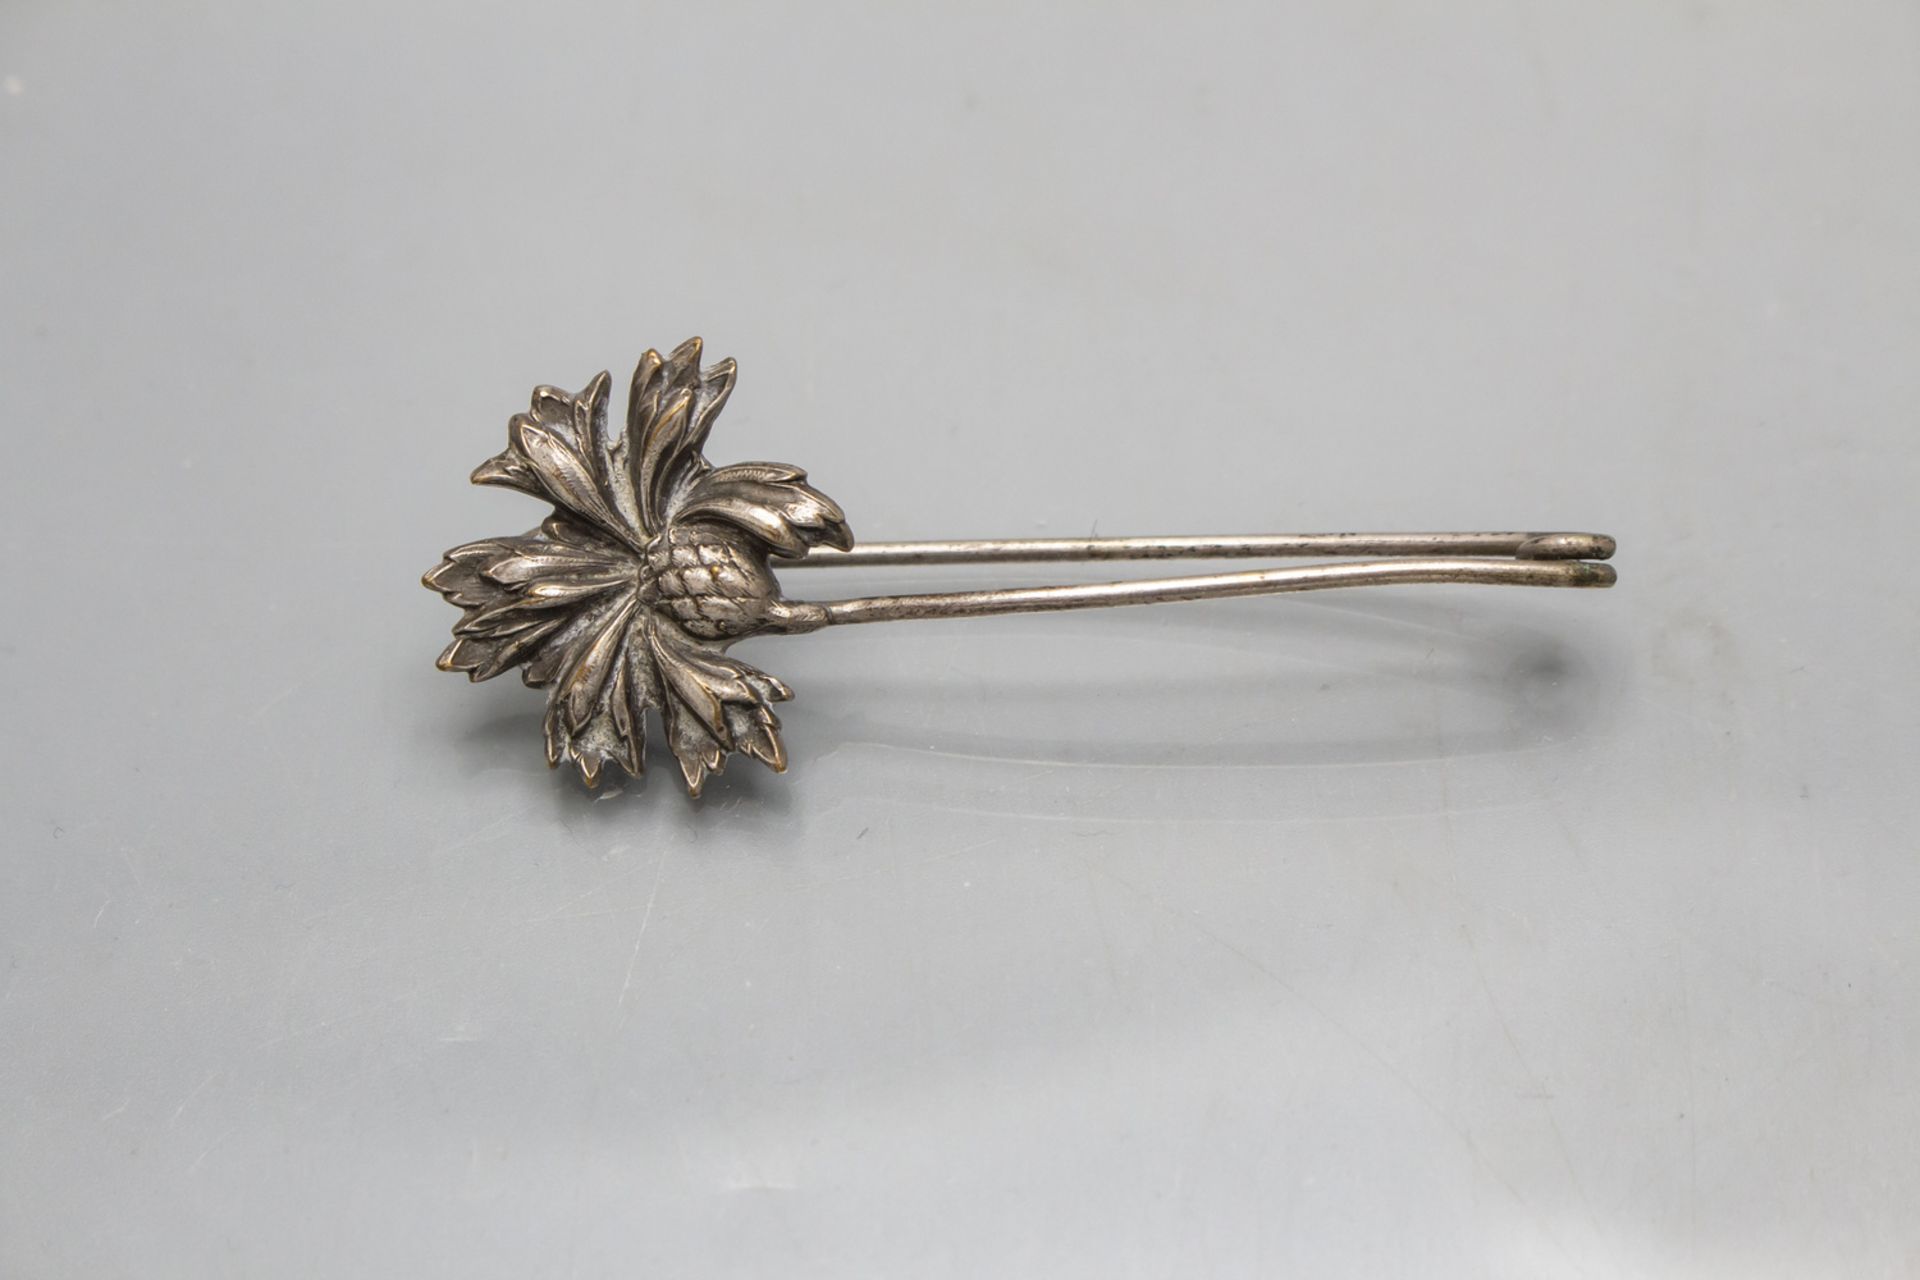 Jugendstil Brosche / Nadel mit einer Kornblume / An Art Nouveau brooch with a corn flower, um 1900